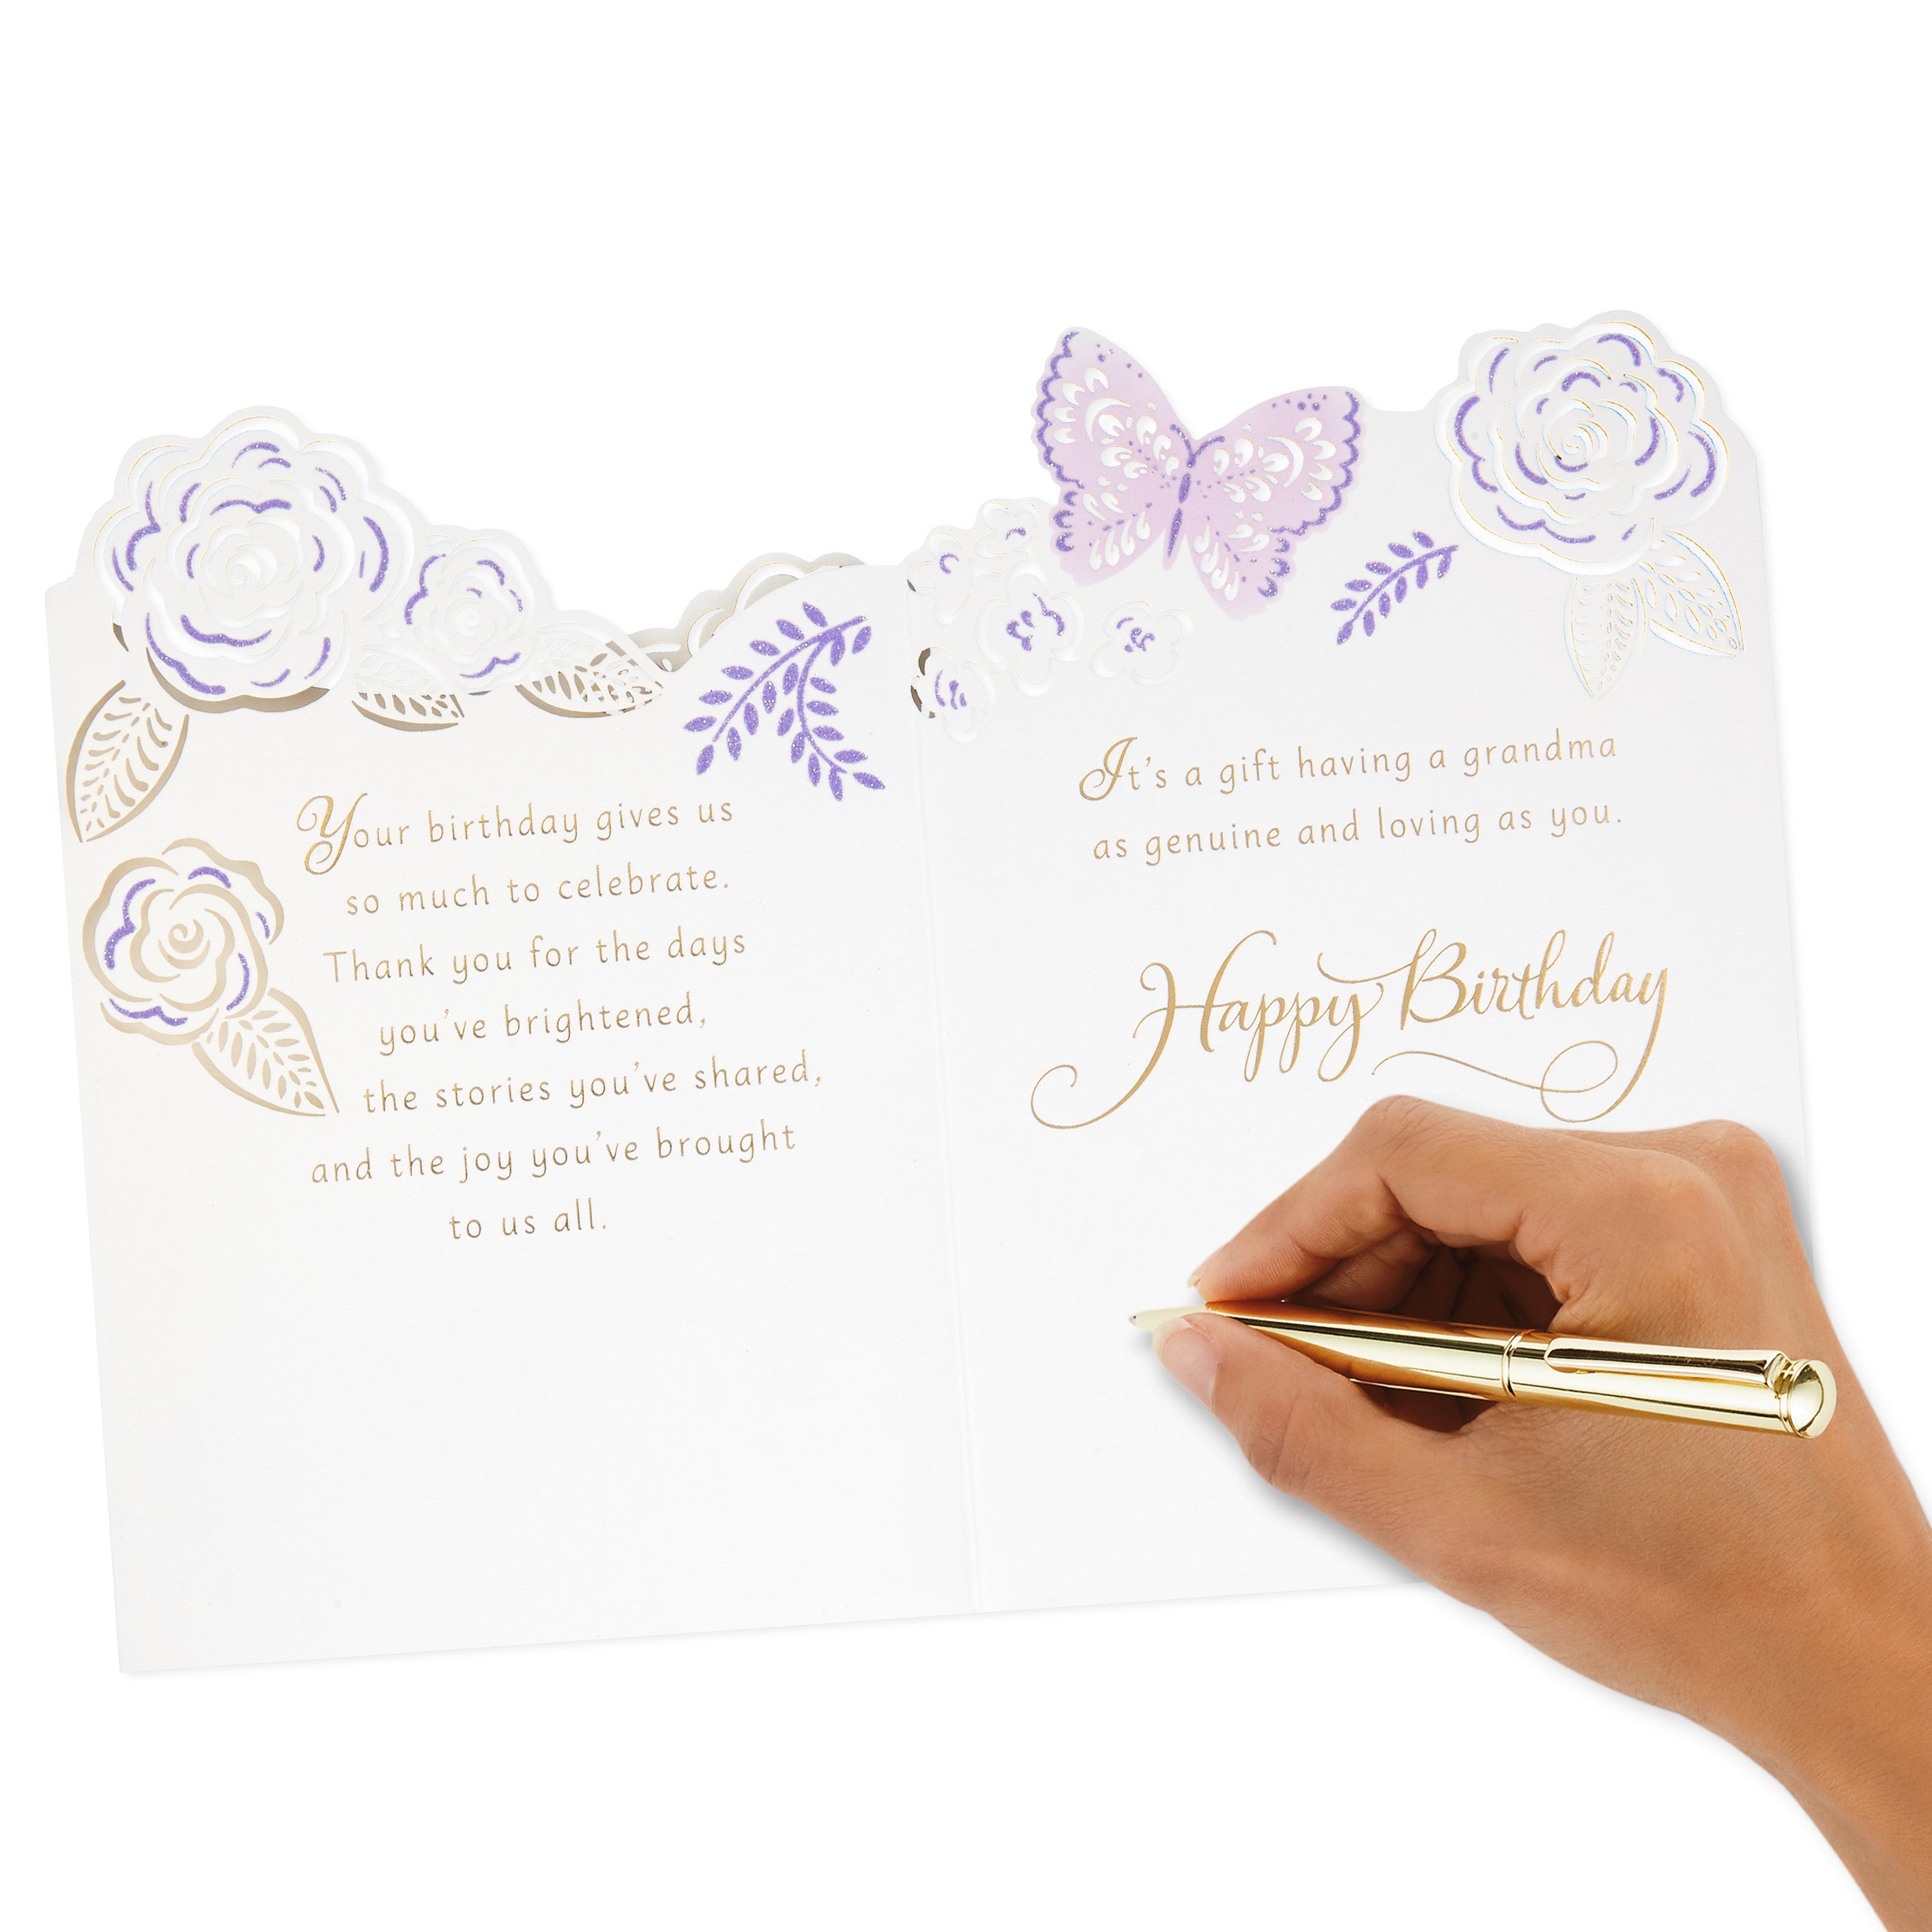 Hallmark Birthday Card for Grandma (Wonderful Gift)